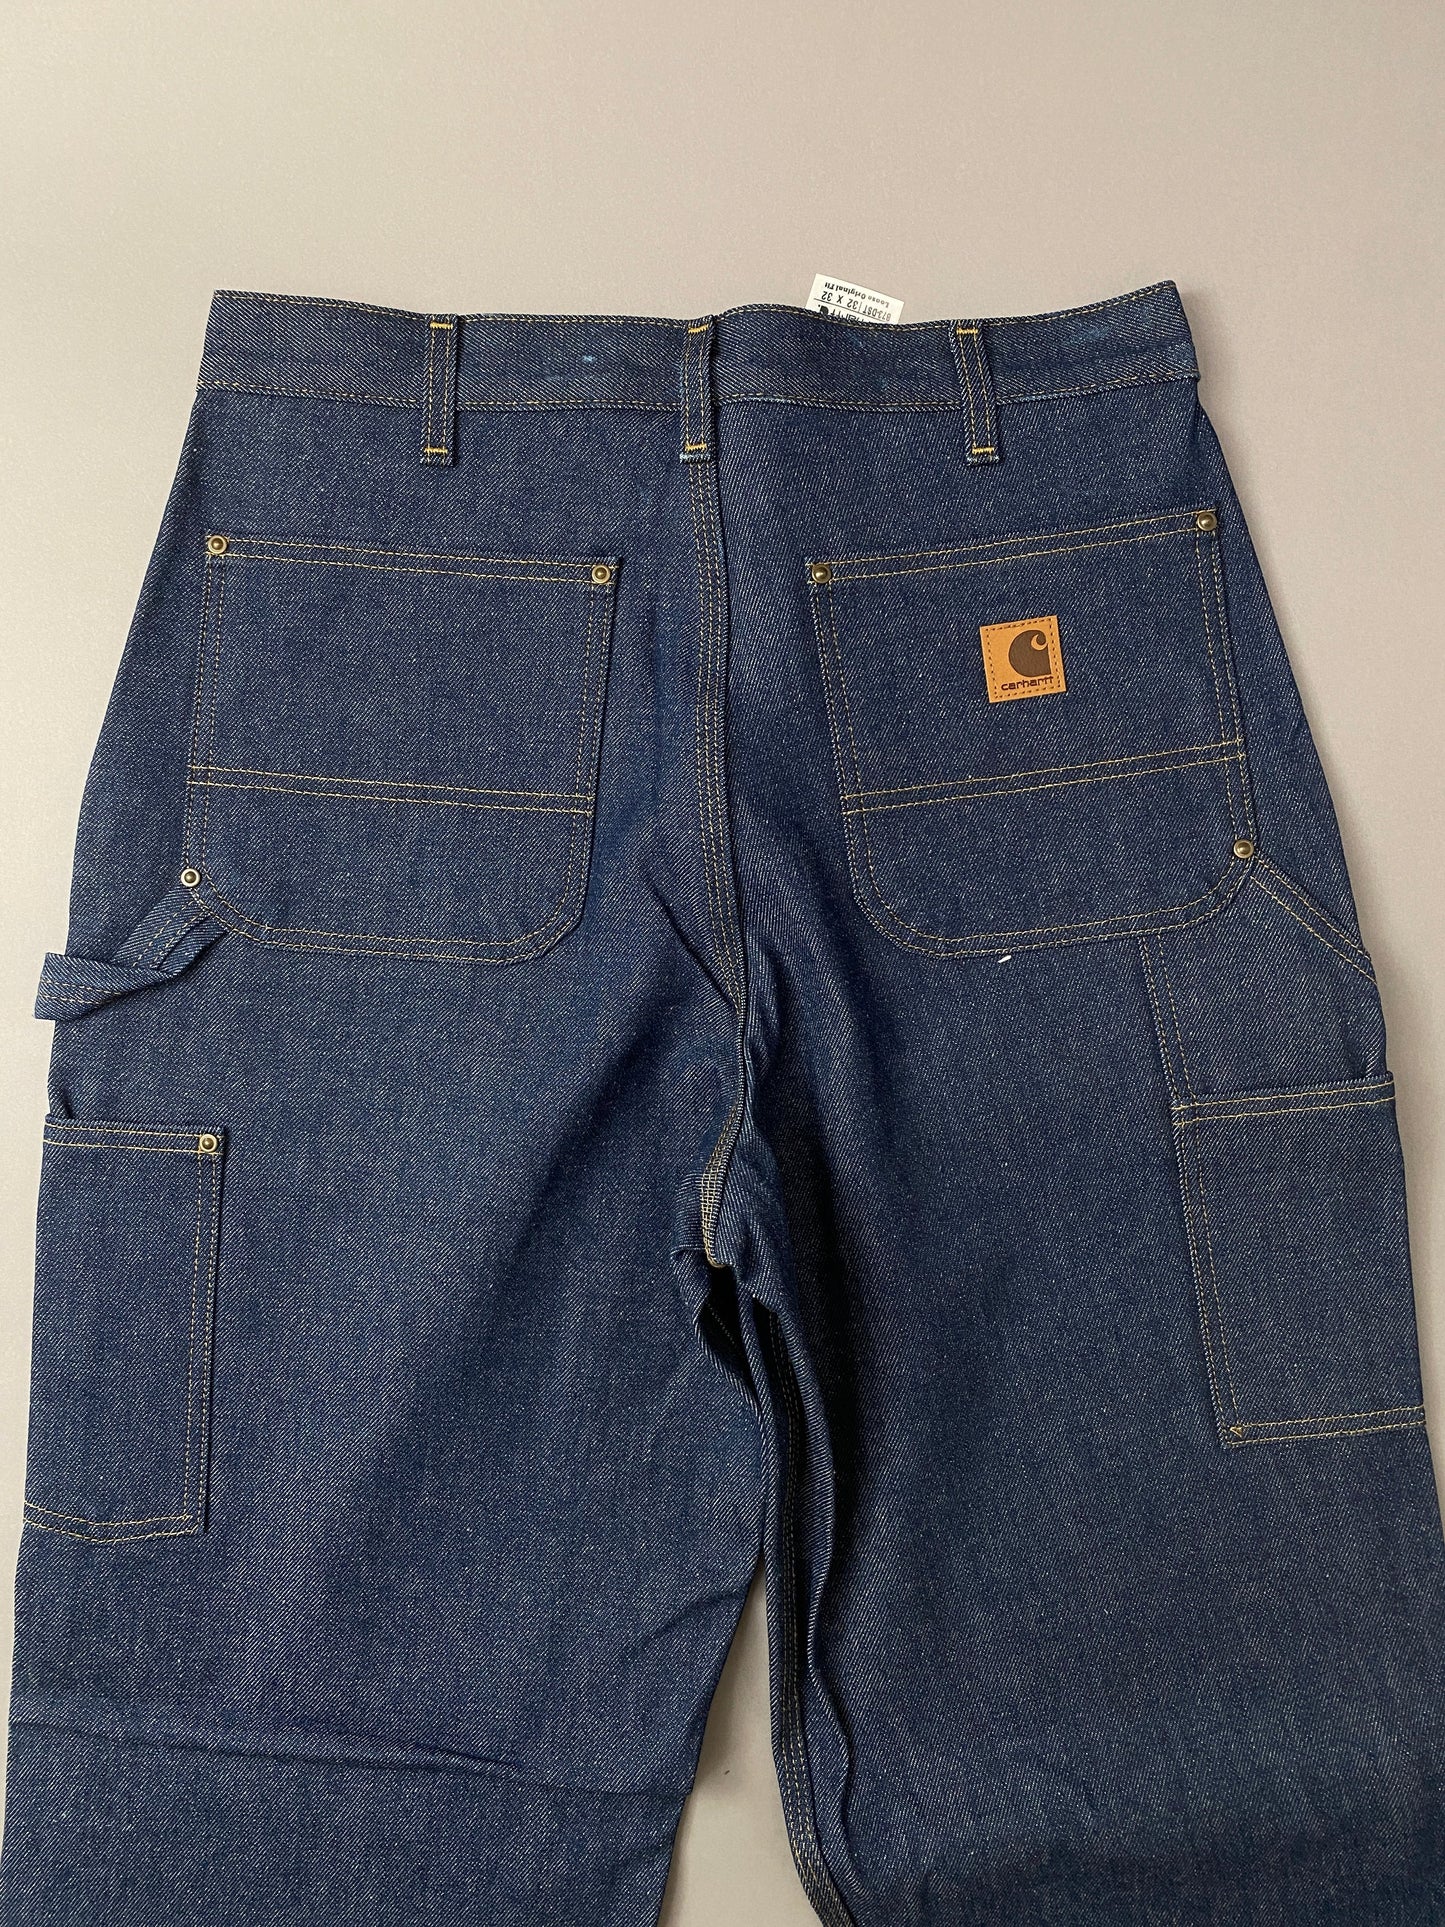 Double Knee Carhartt Jeans - 33 x 32